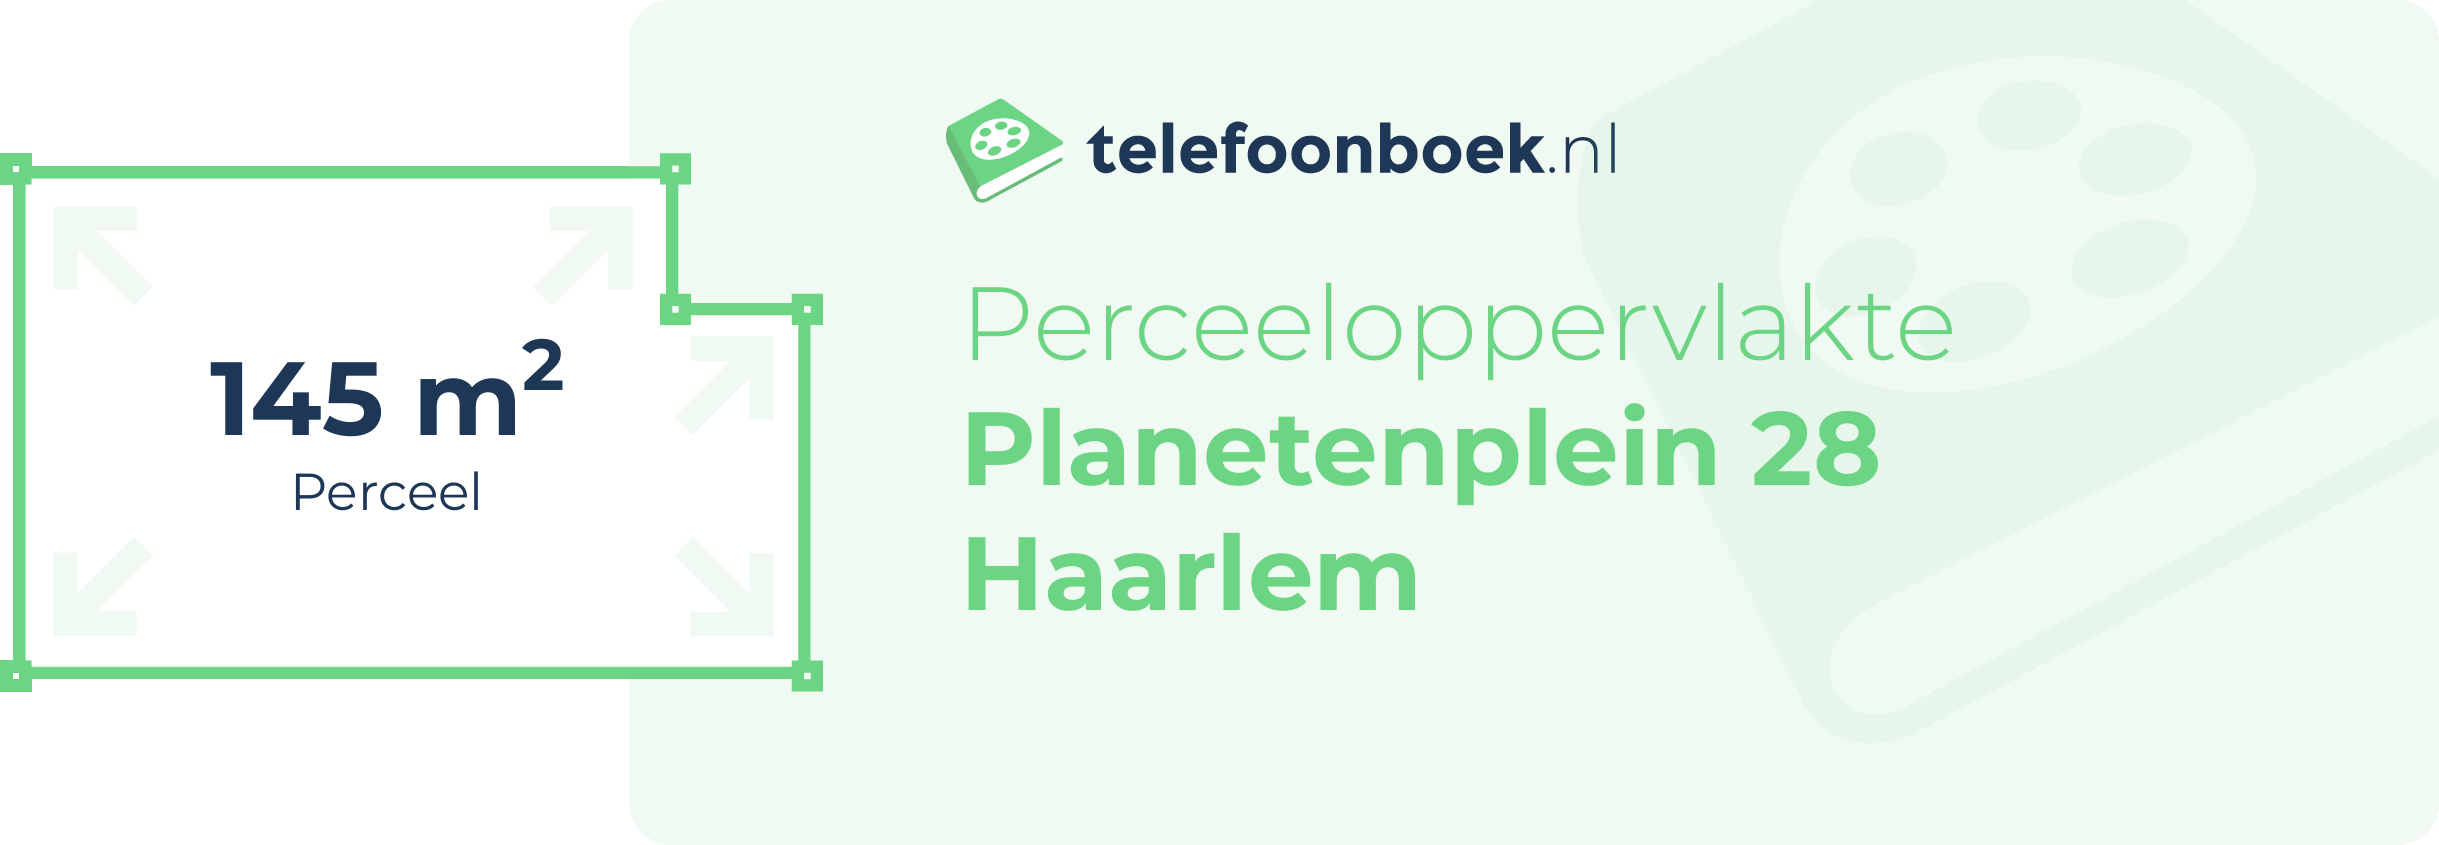 Perceeloppervlakte Planetenplein 28 Haarlem